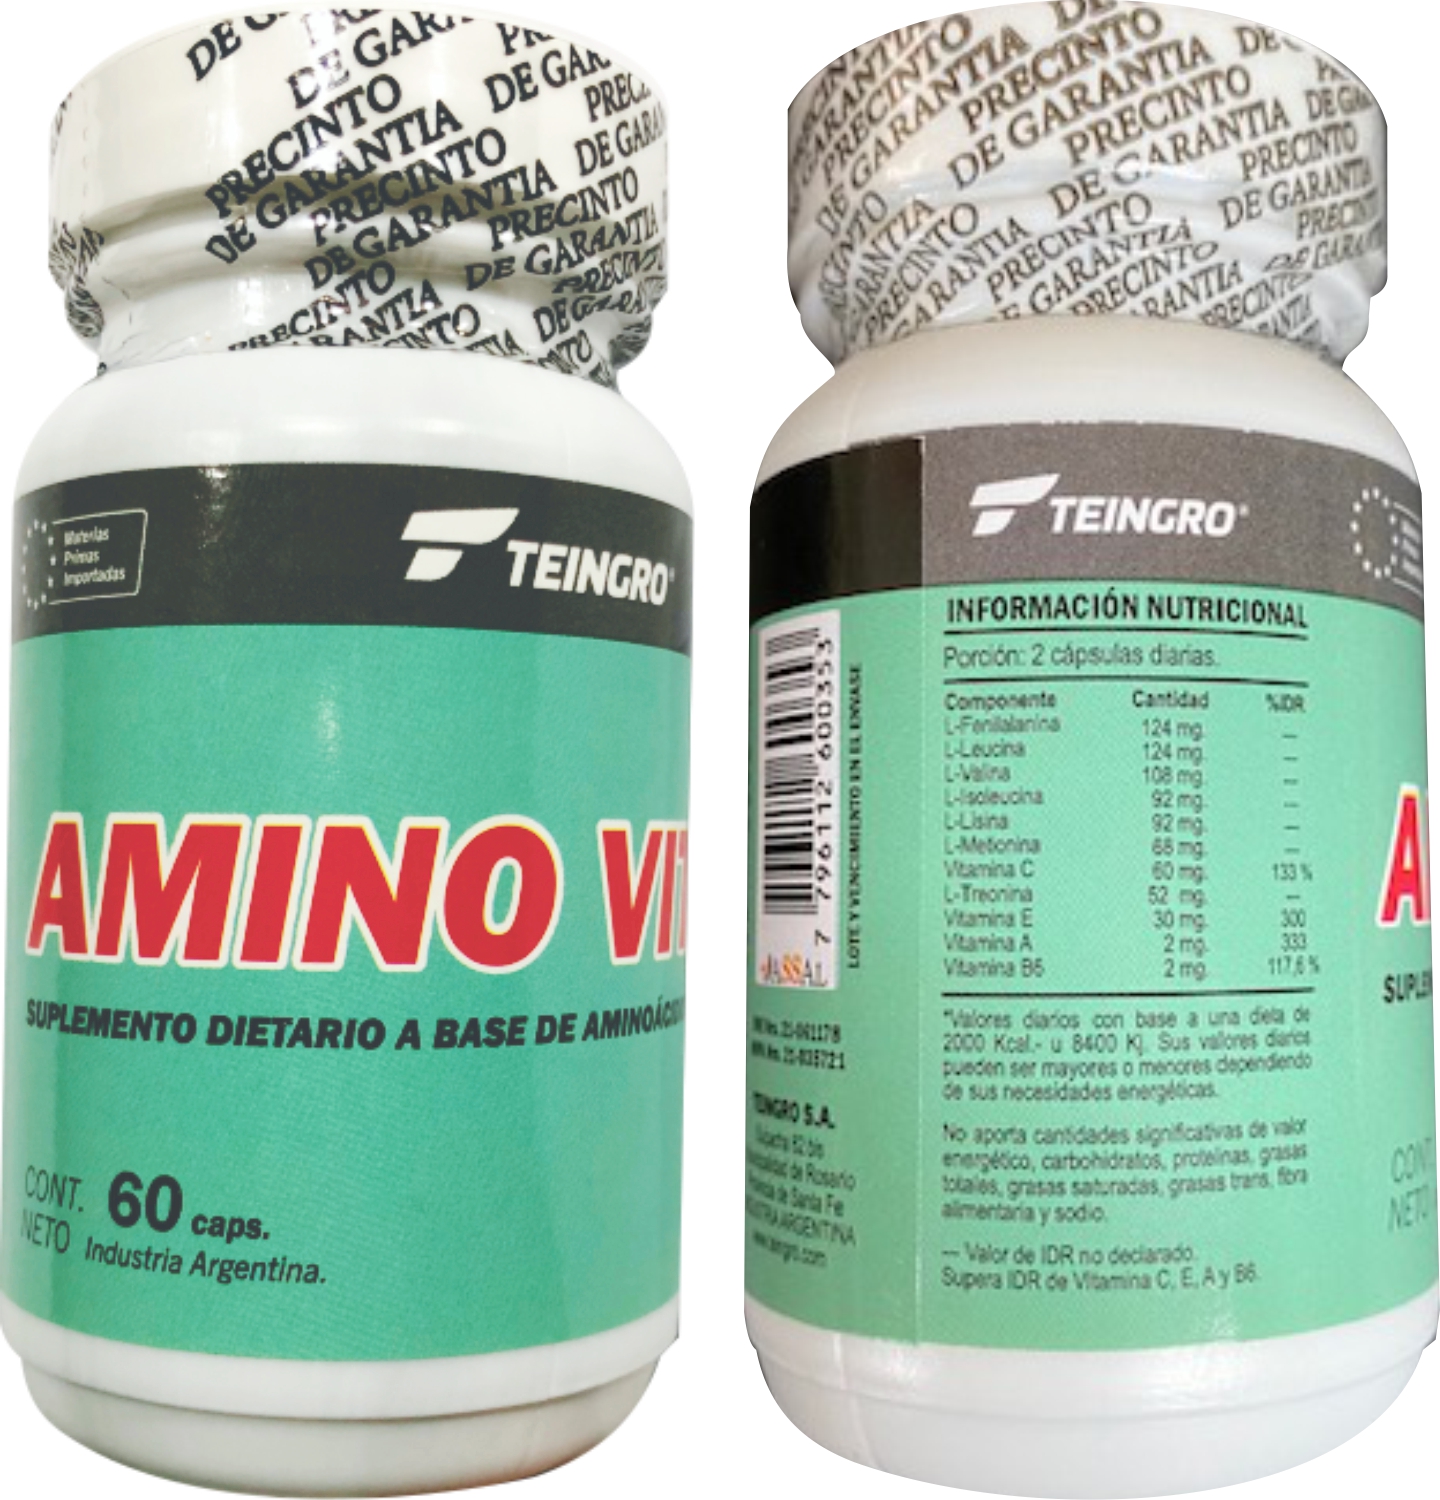 aminovital image